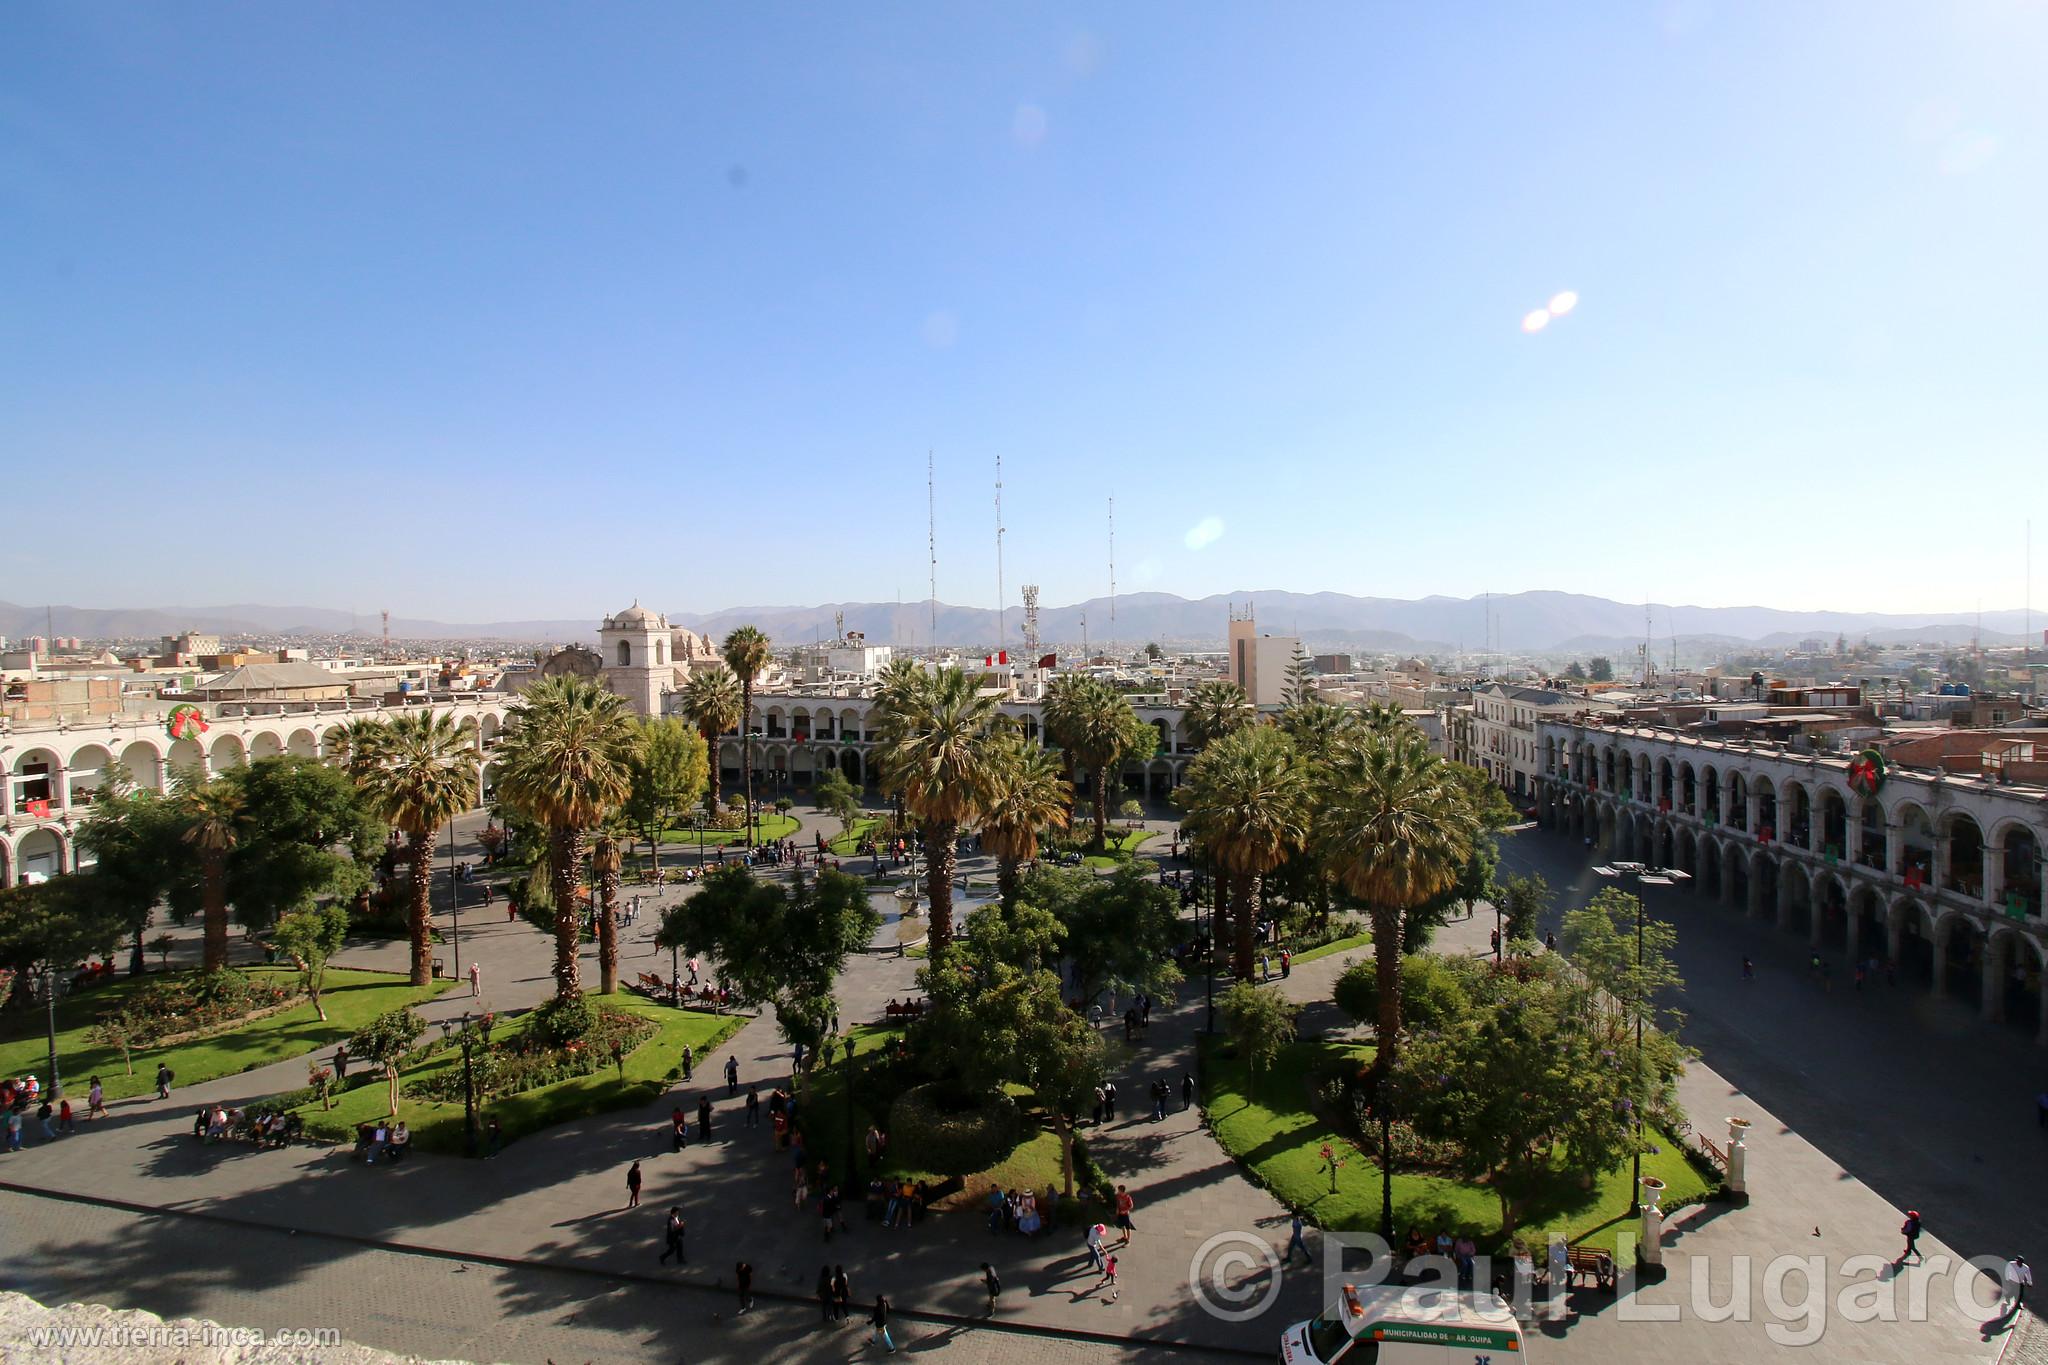 Plaza de Armas, Arequipa